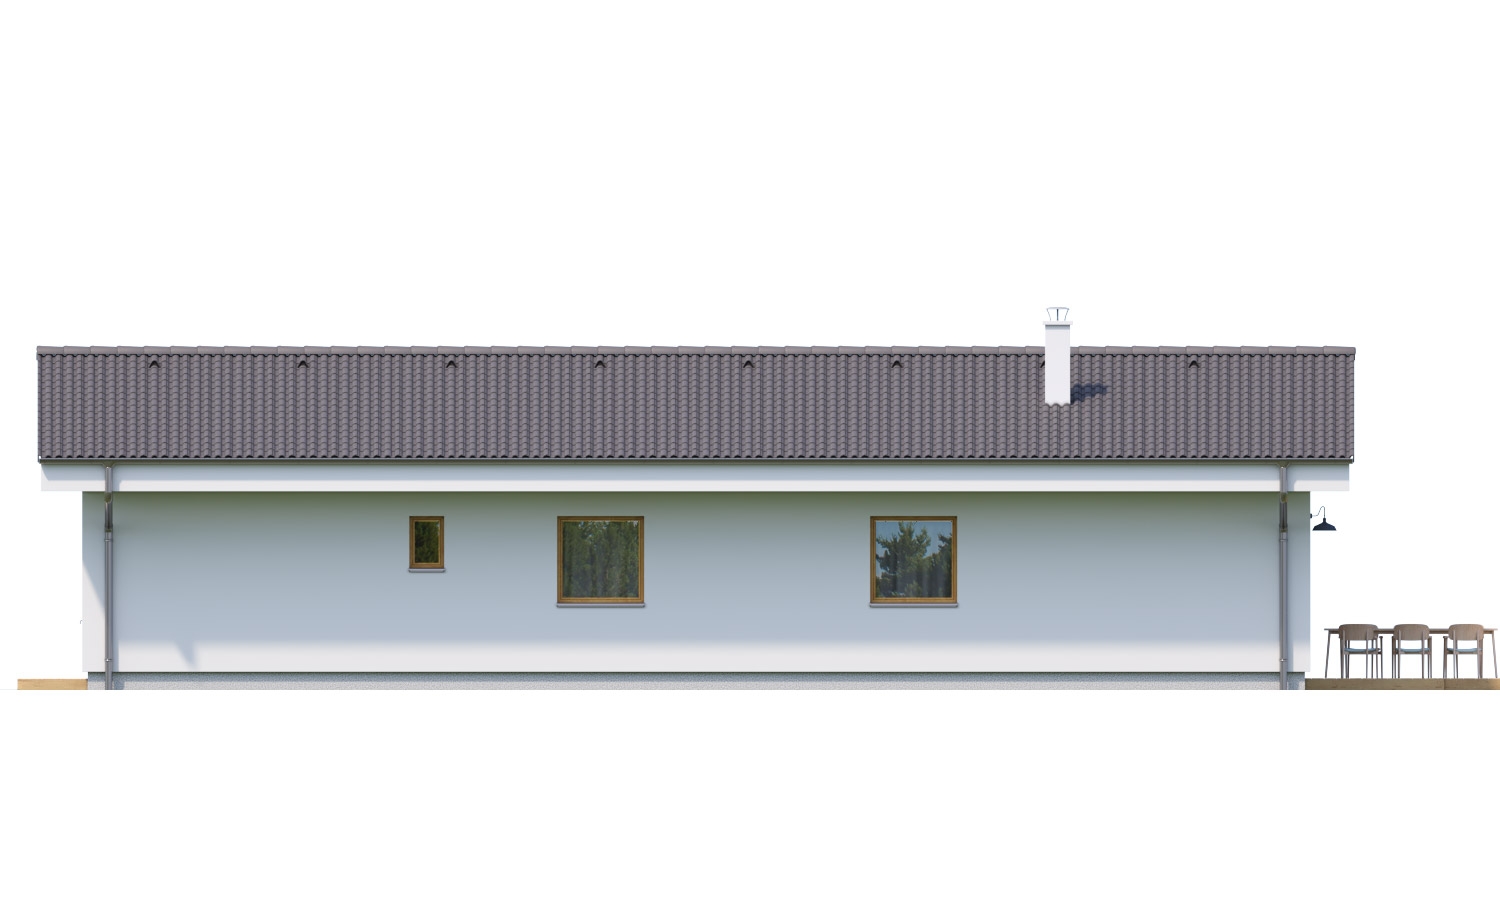 projekt pre jednoduchý bungalov na úzky pozemok